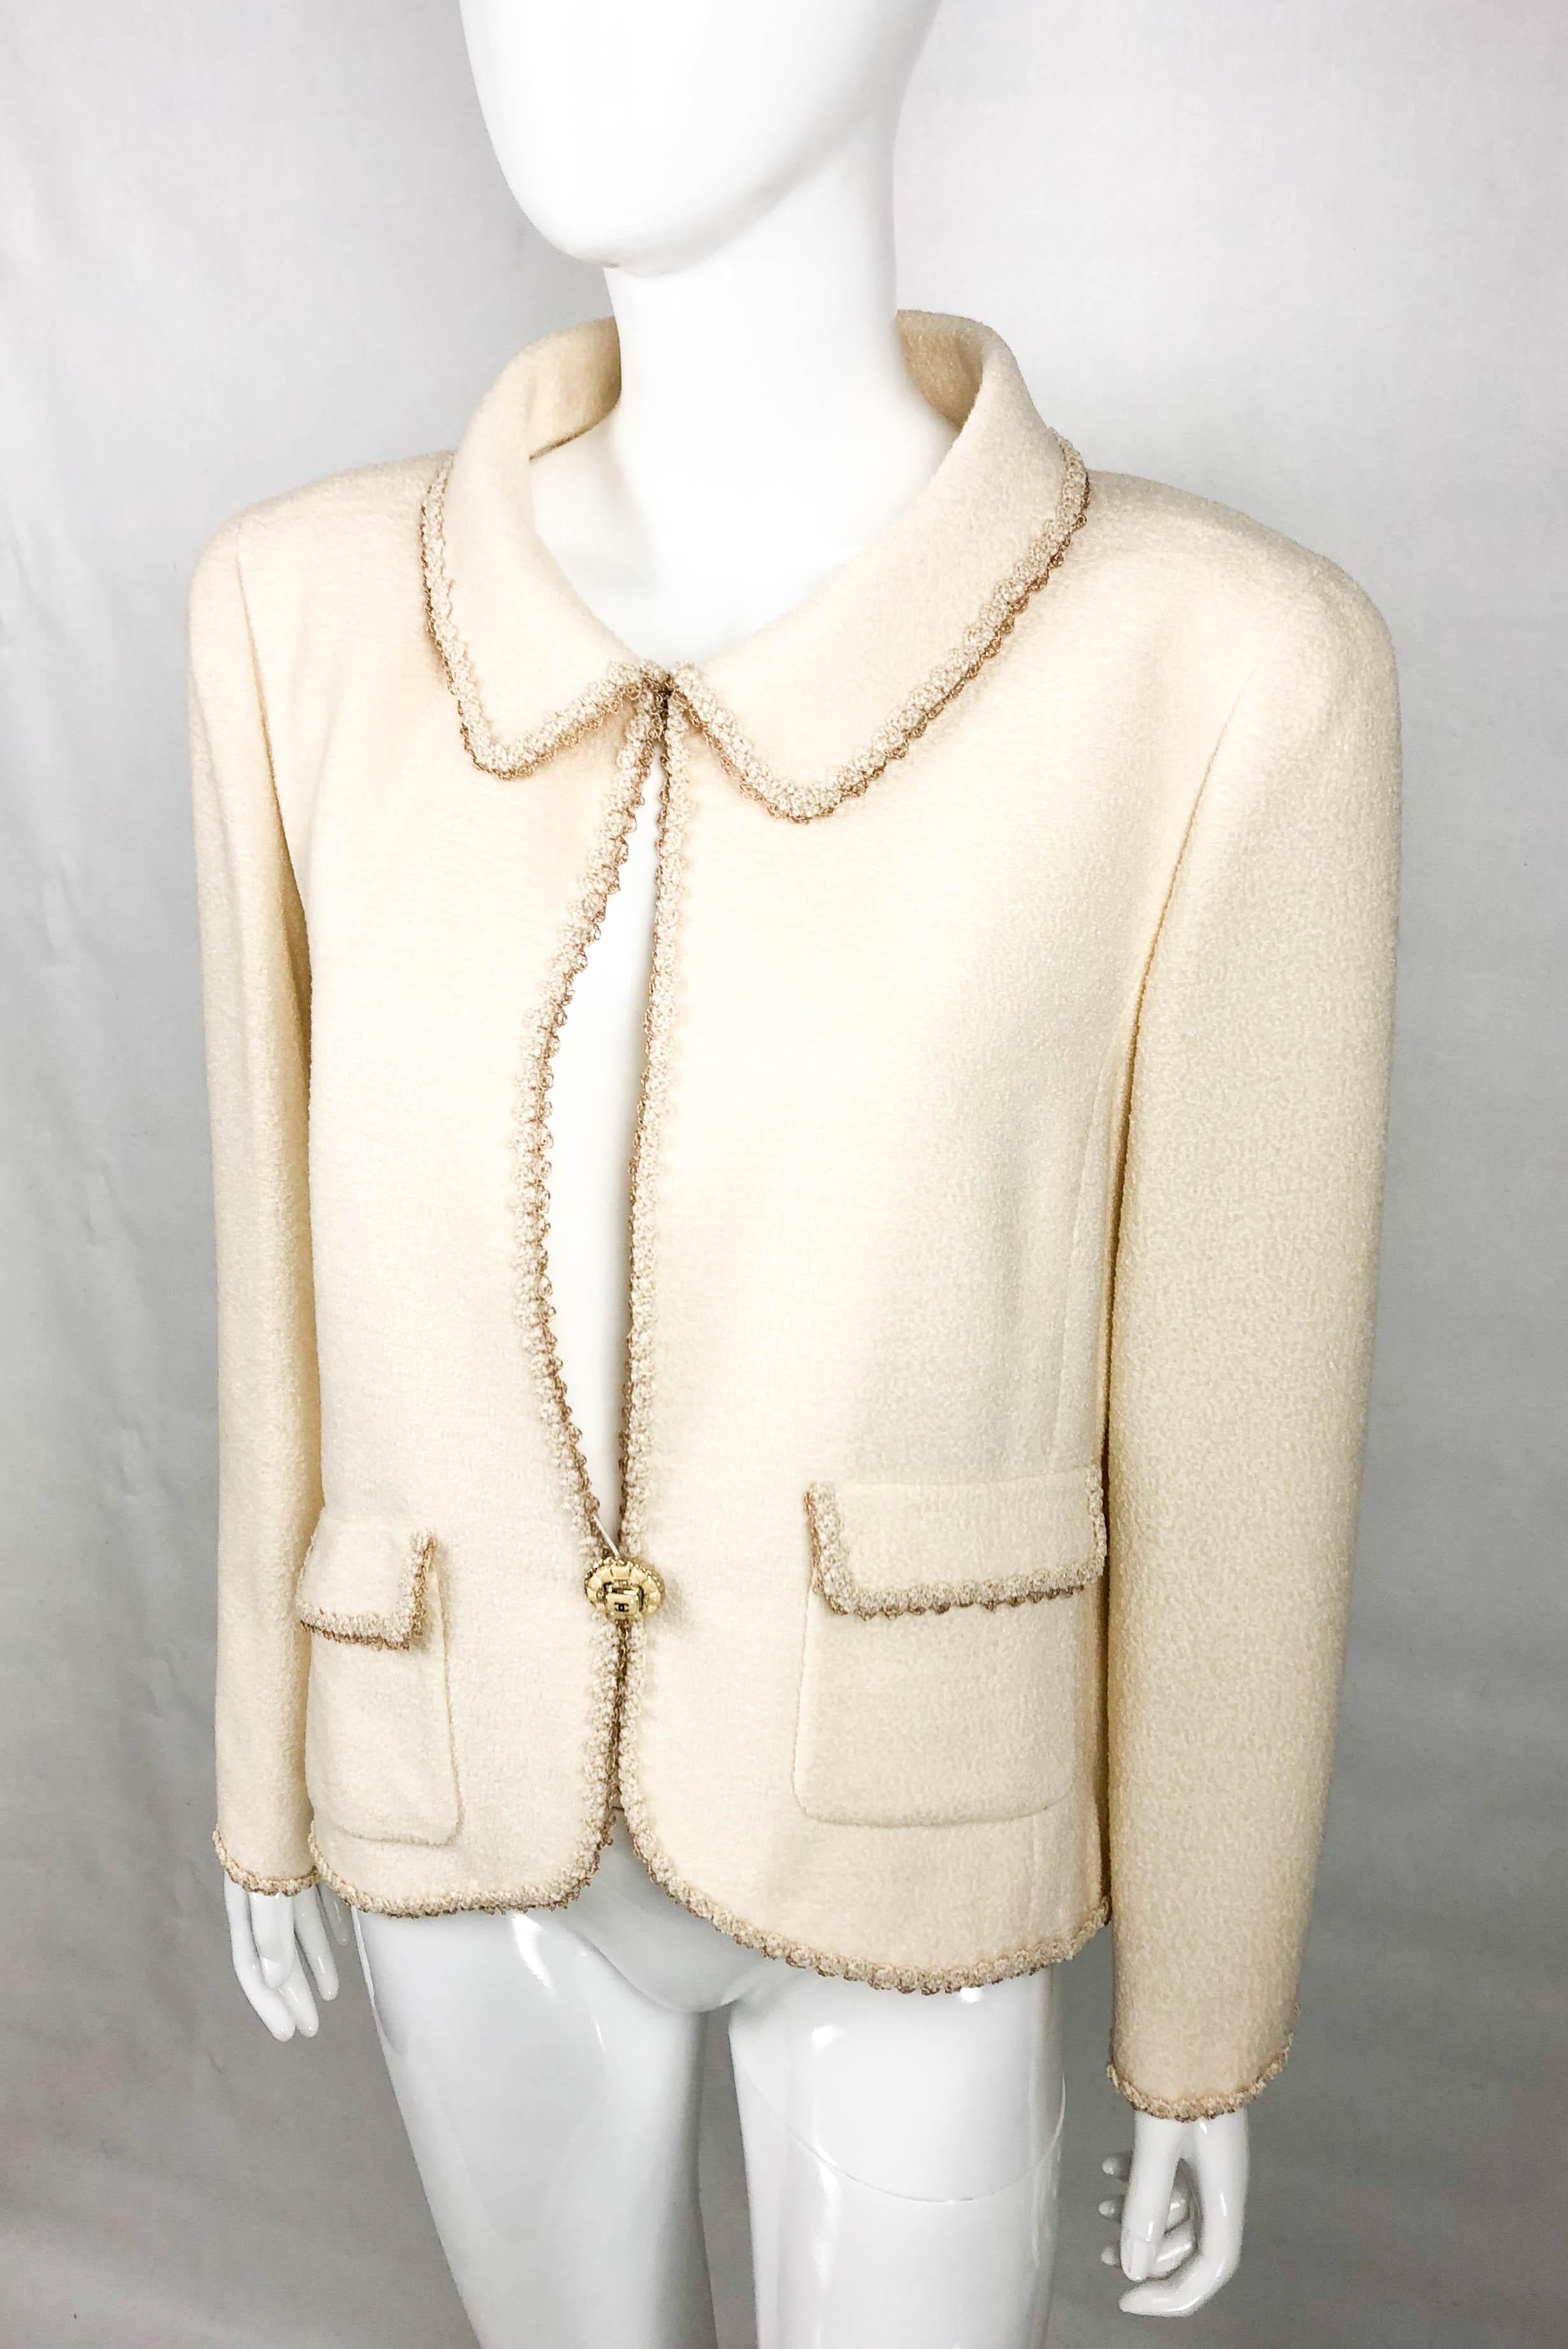 2010 Chanel Unworn Runway Look Cream Jacket With Gold Thread Trim For Sale 3